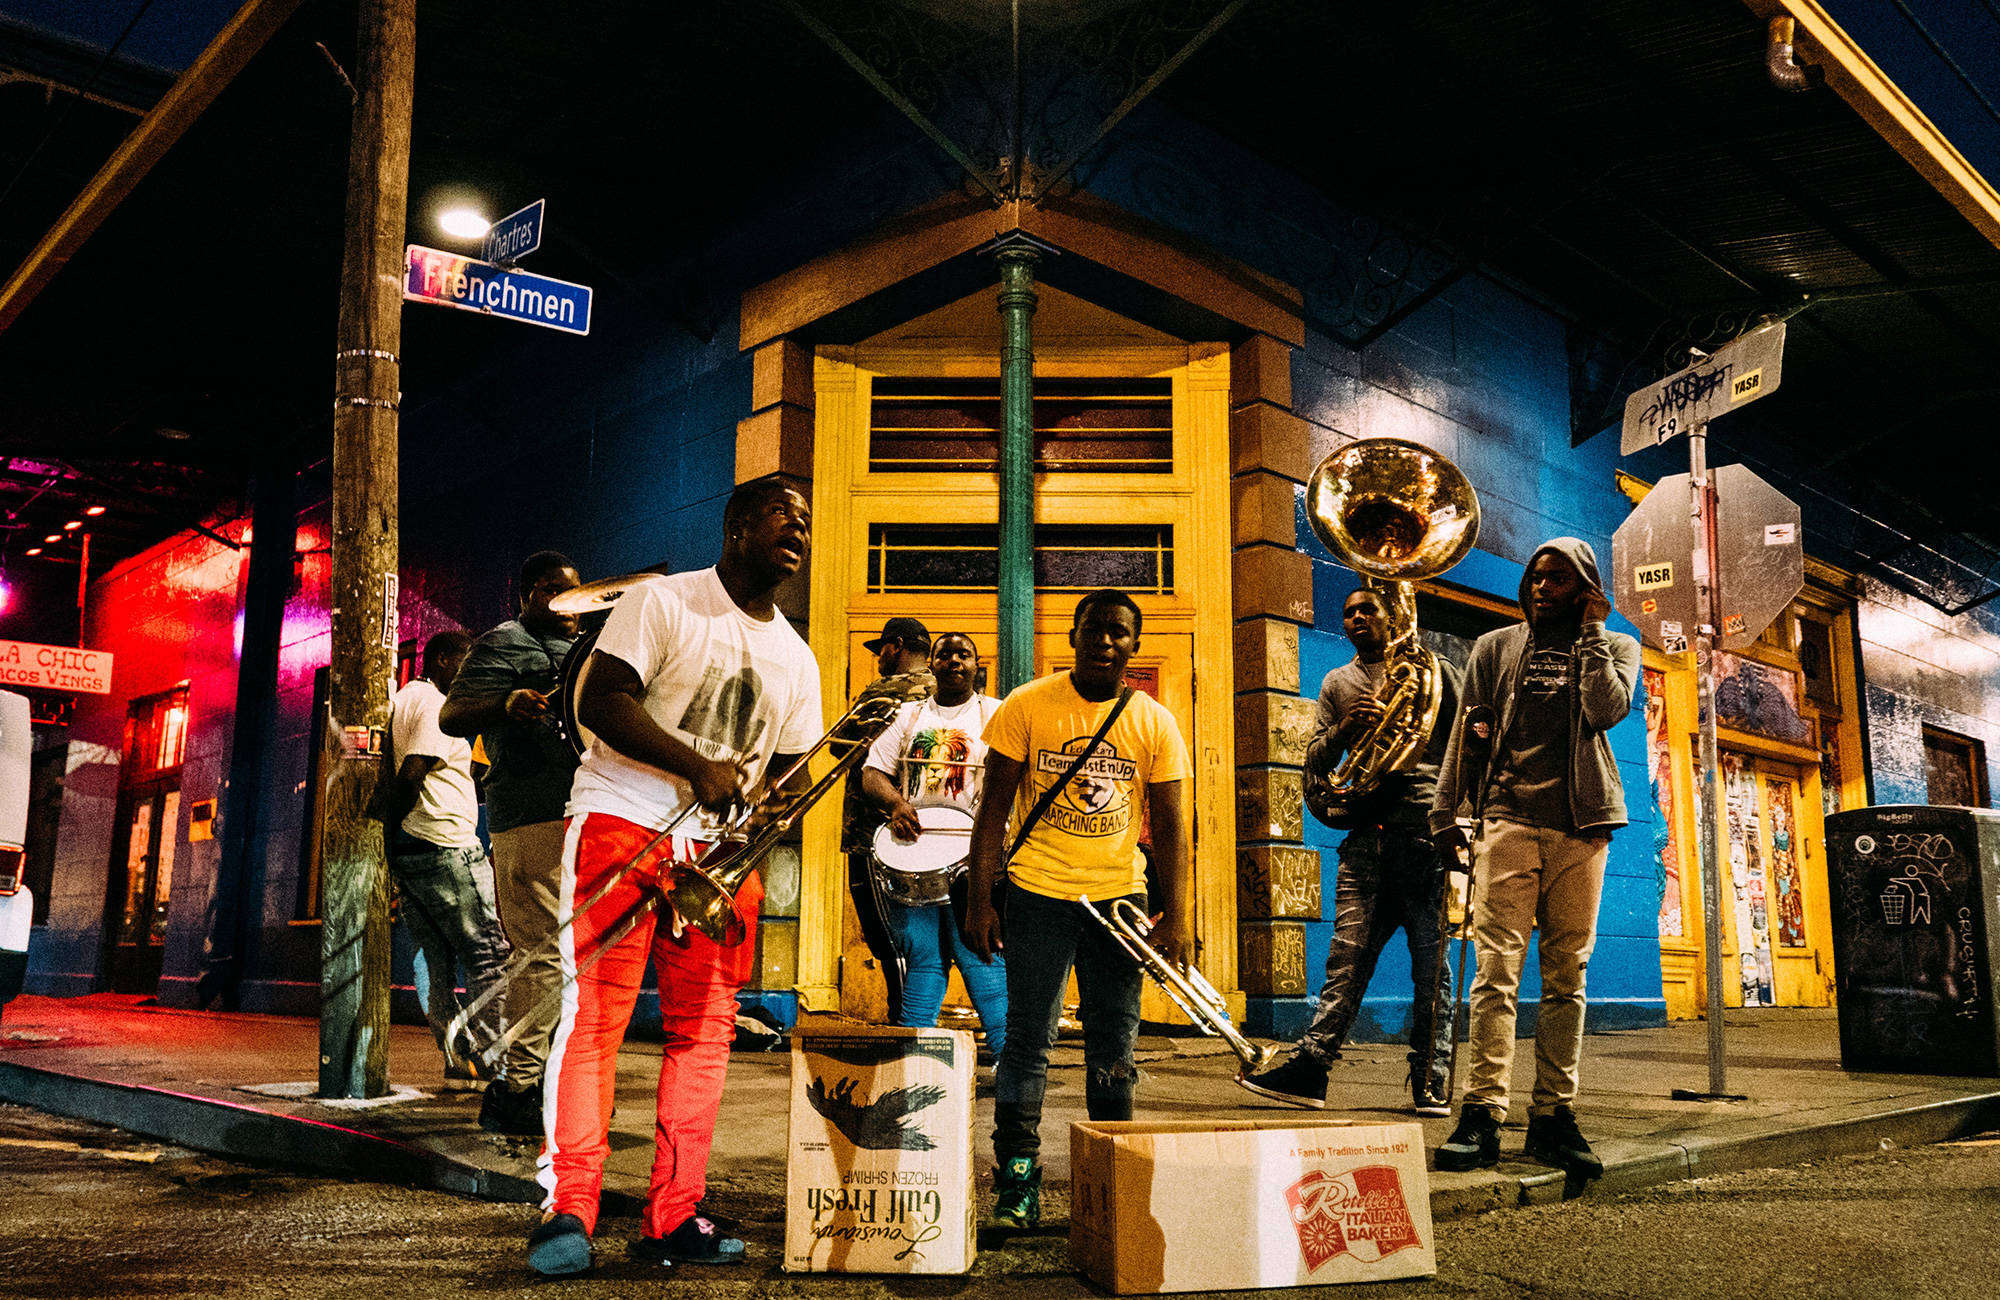 new orleans jazzband